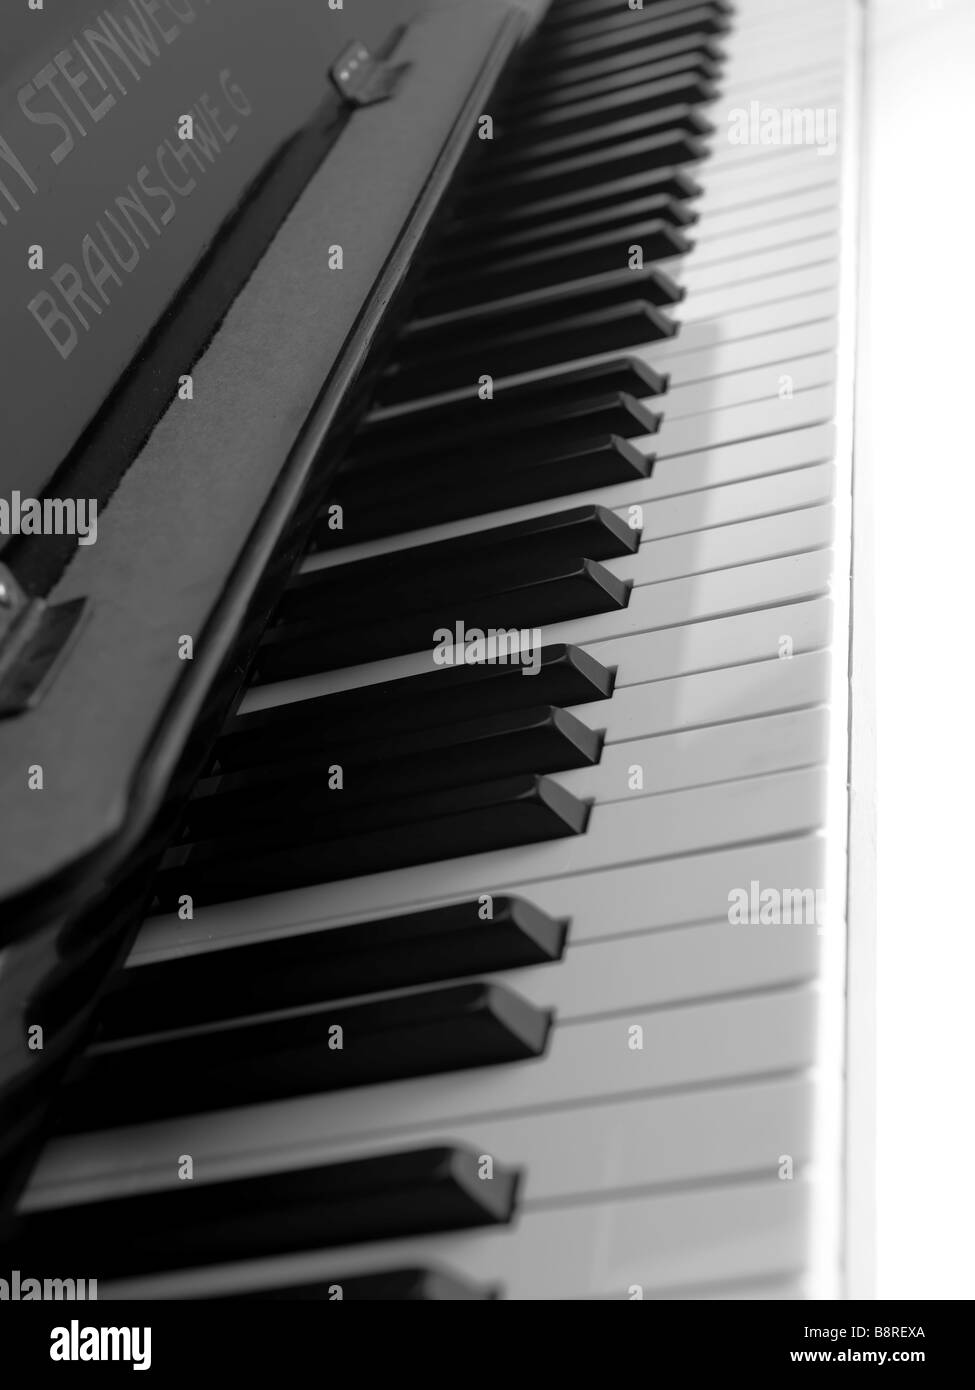 Piano, Keyboard, Music, Still Life, Instruments, Orchestra, Classic Stock Photo